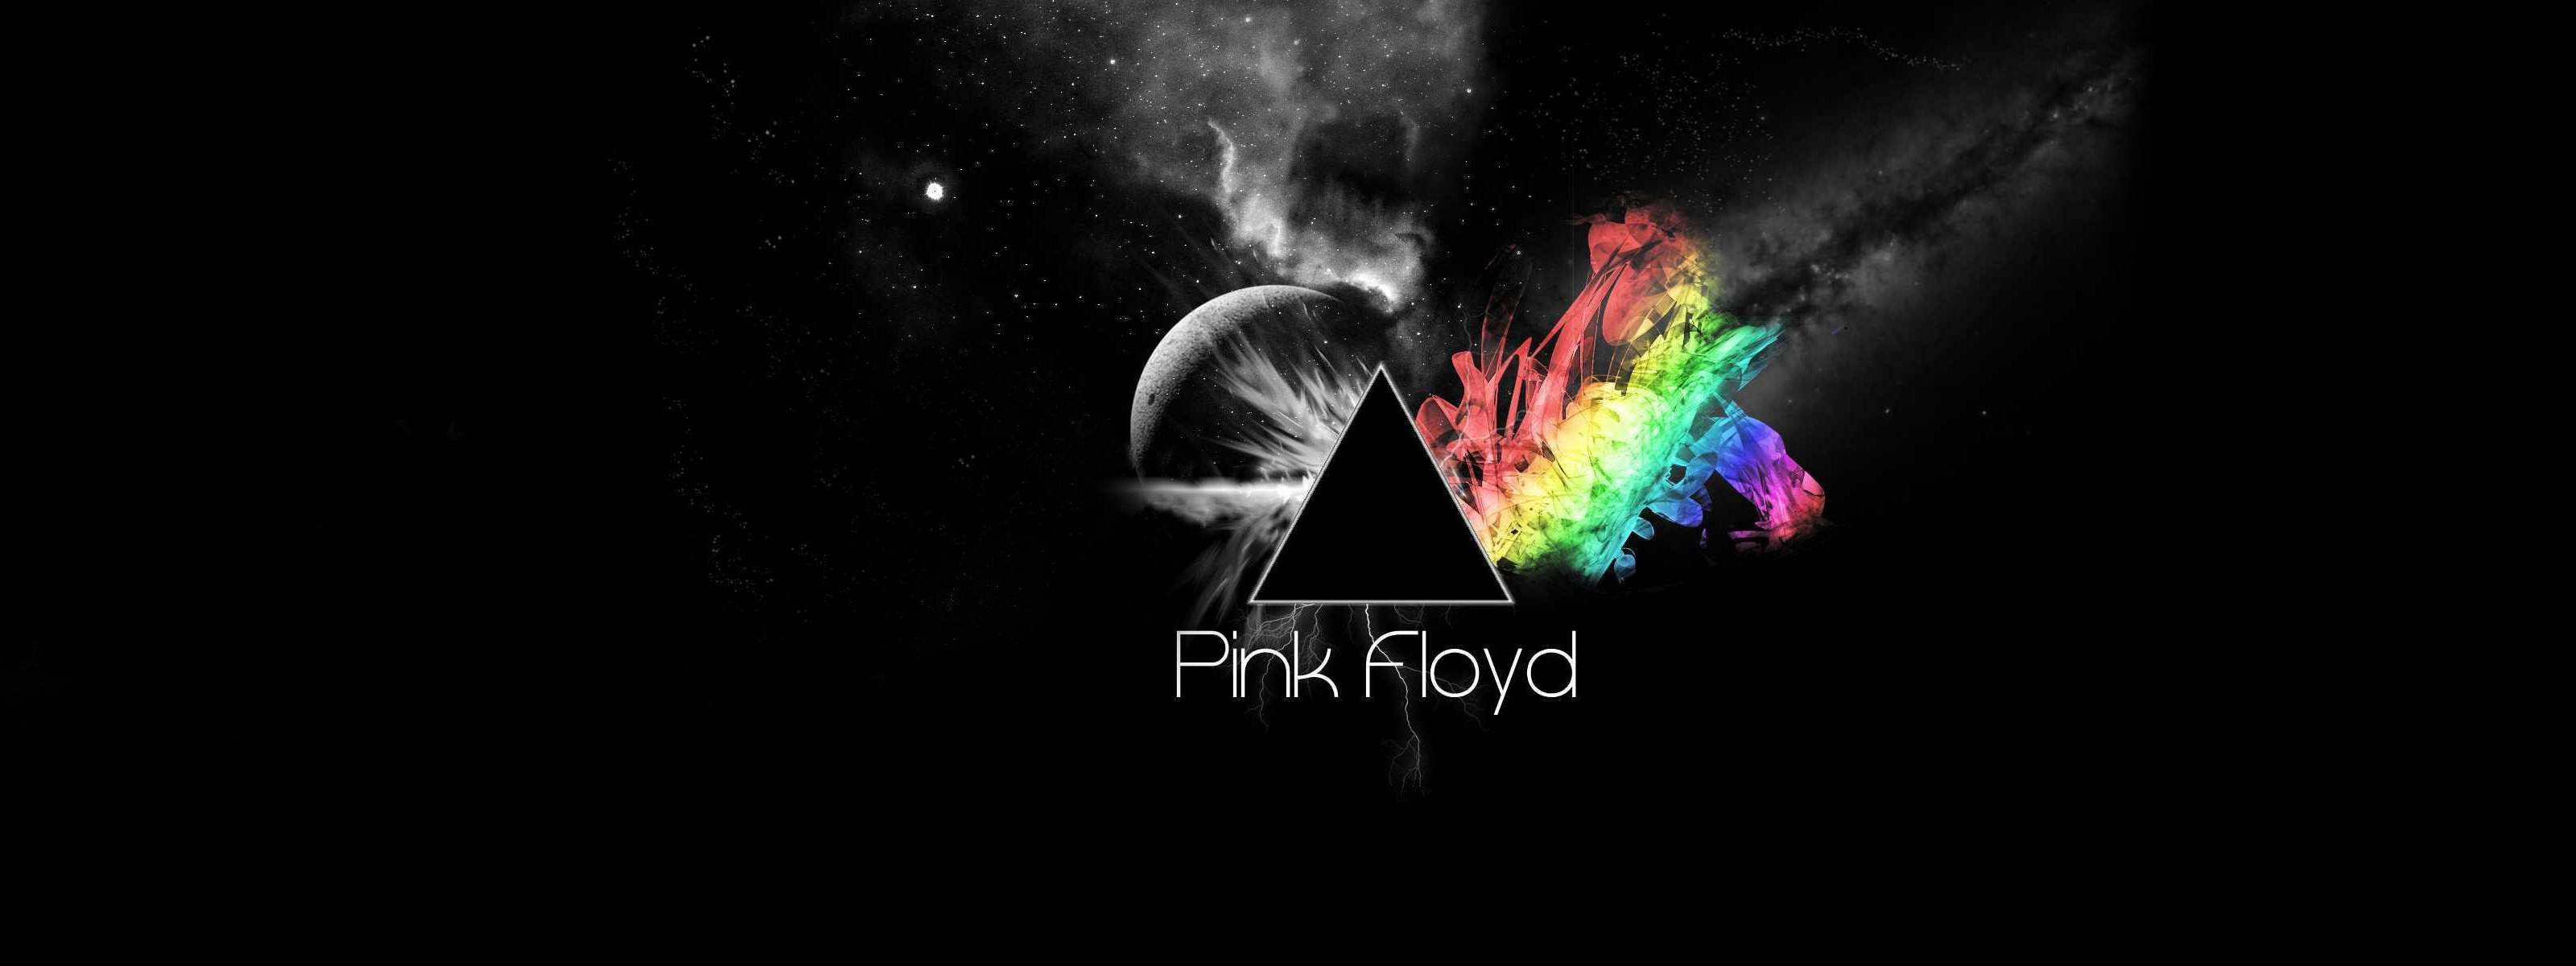 Pink Floyd News The Wall HD Wallpaper Jpg